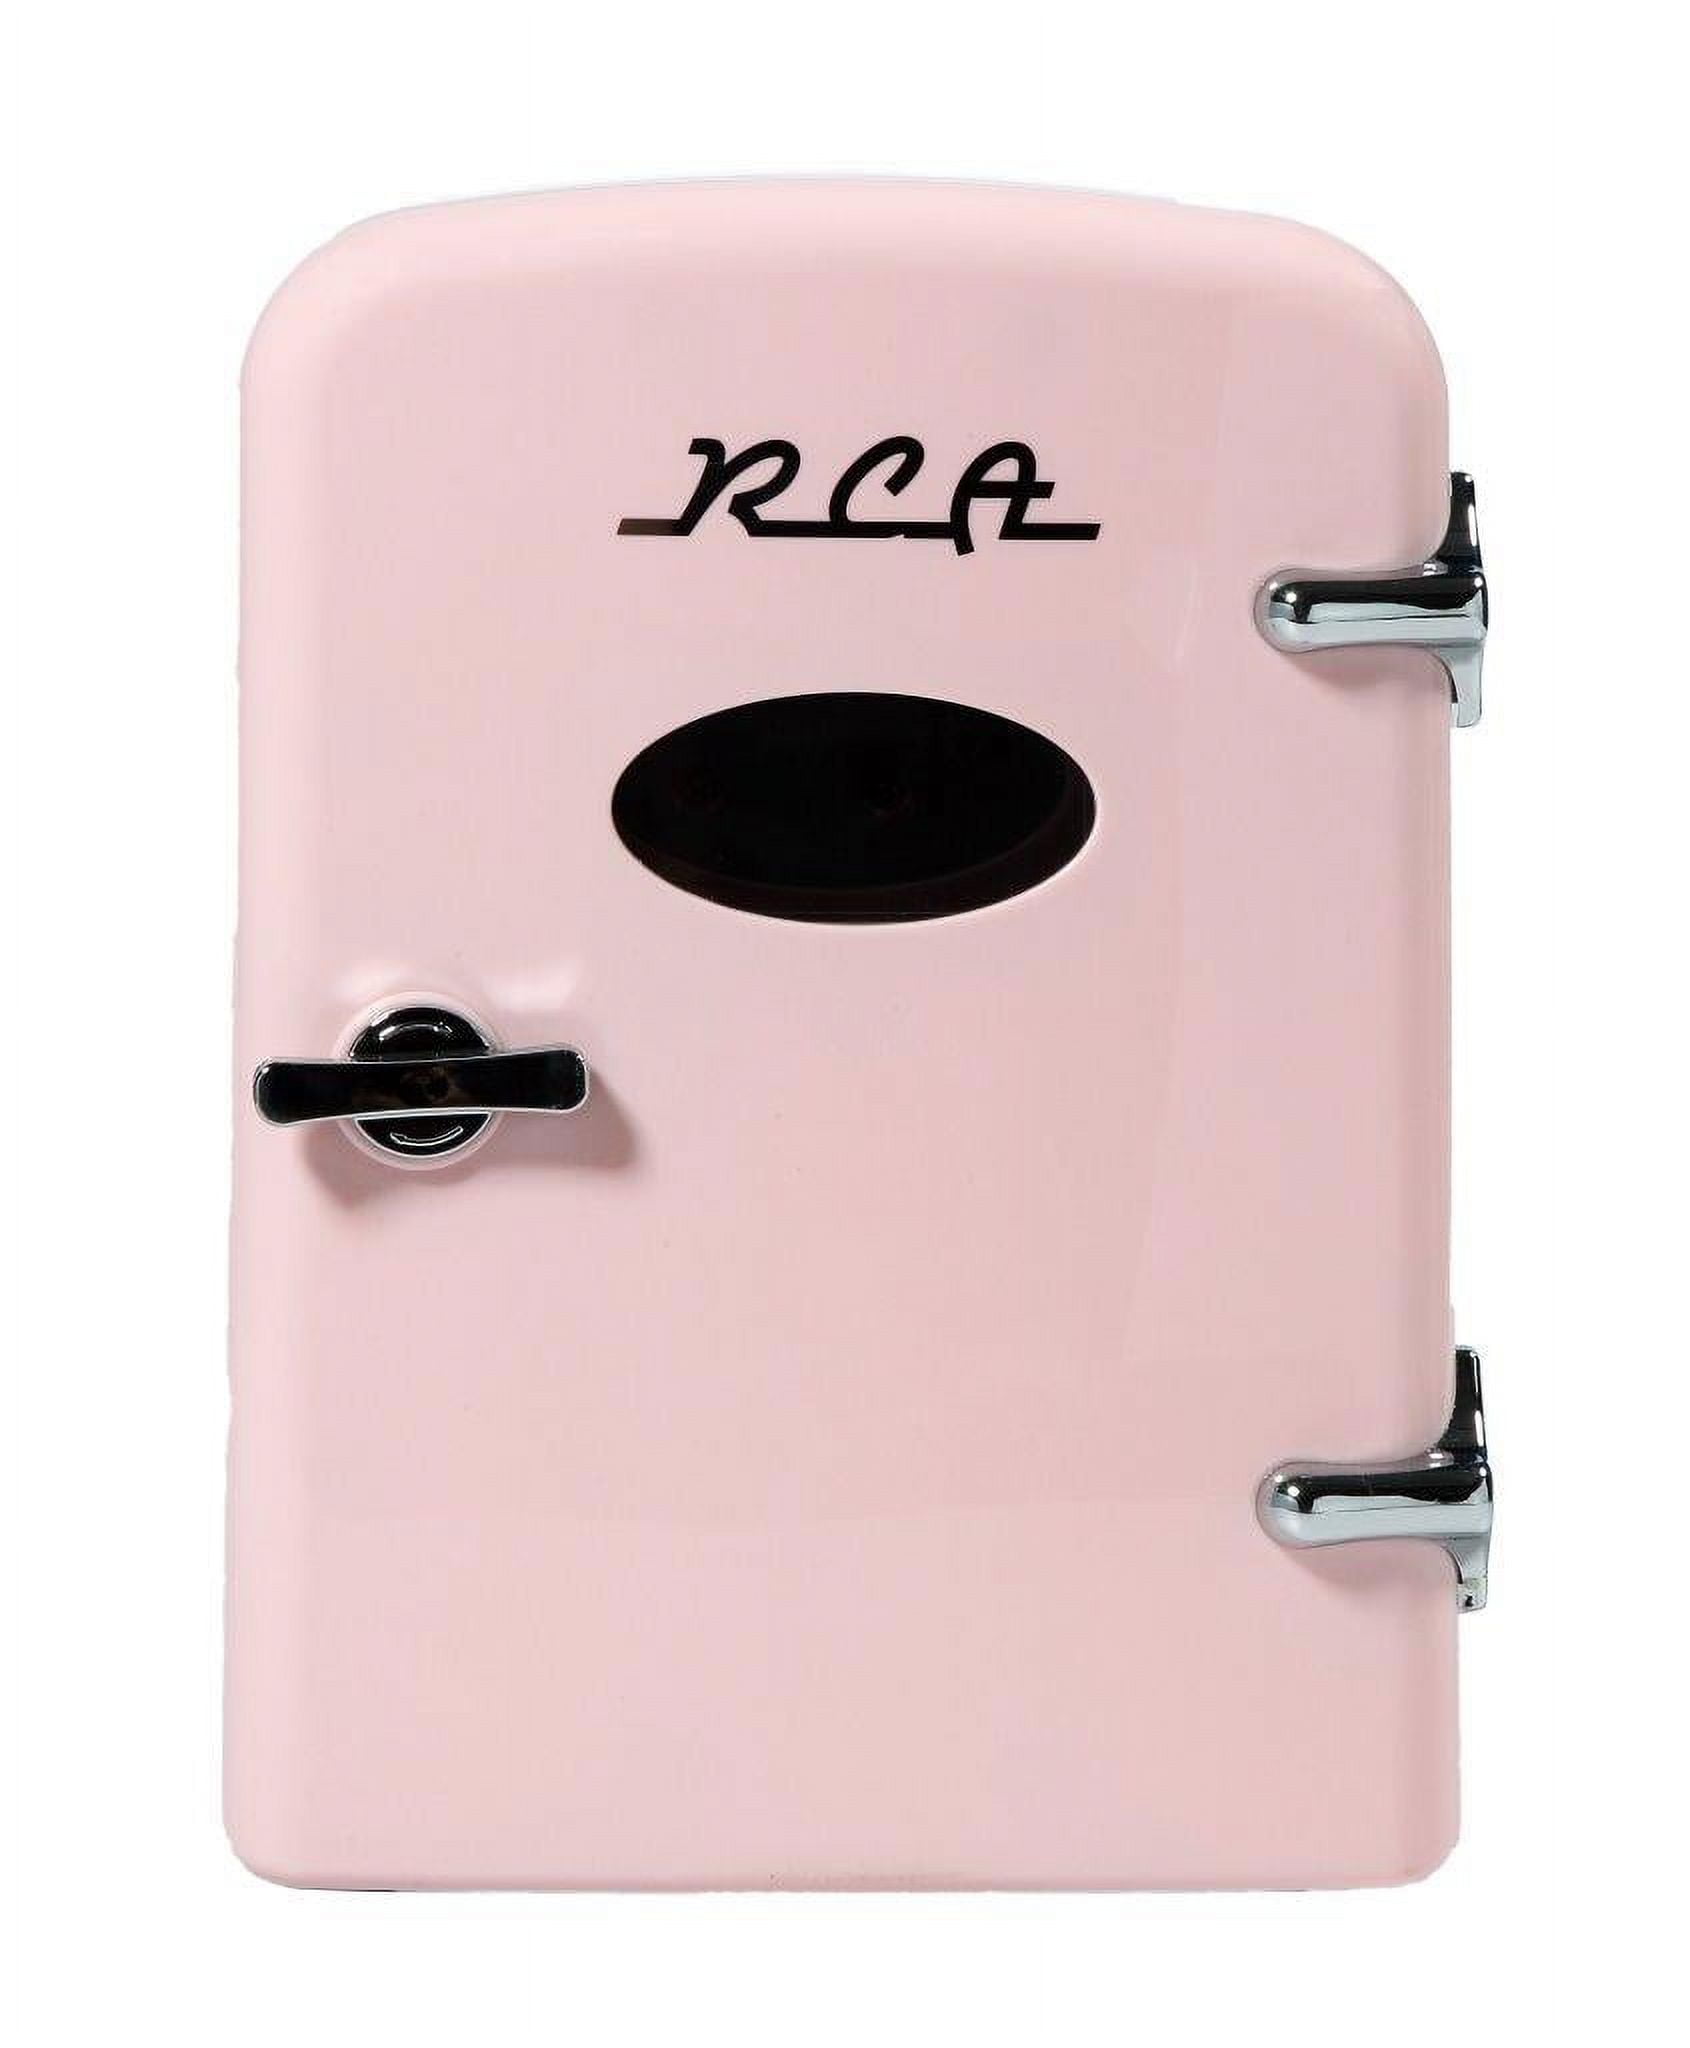 RCA Mini Fridge for Sale in Pittsburg, CA - OfferUp